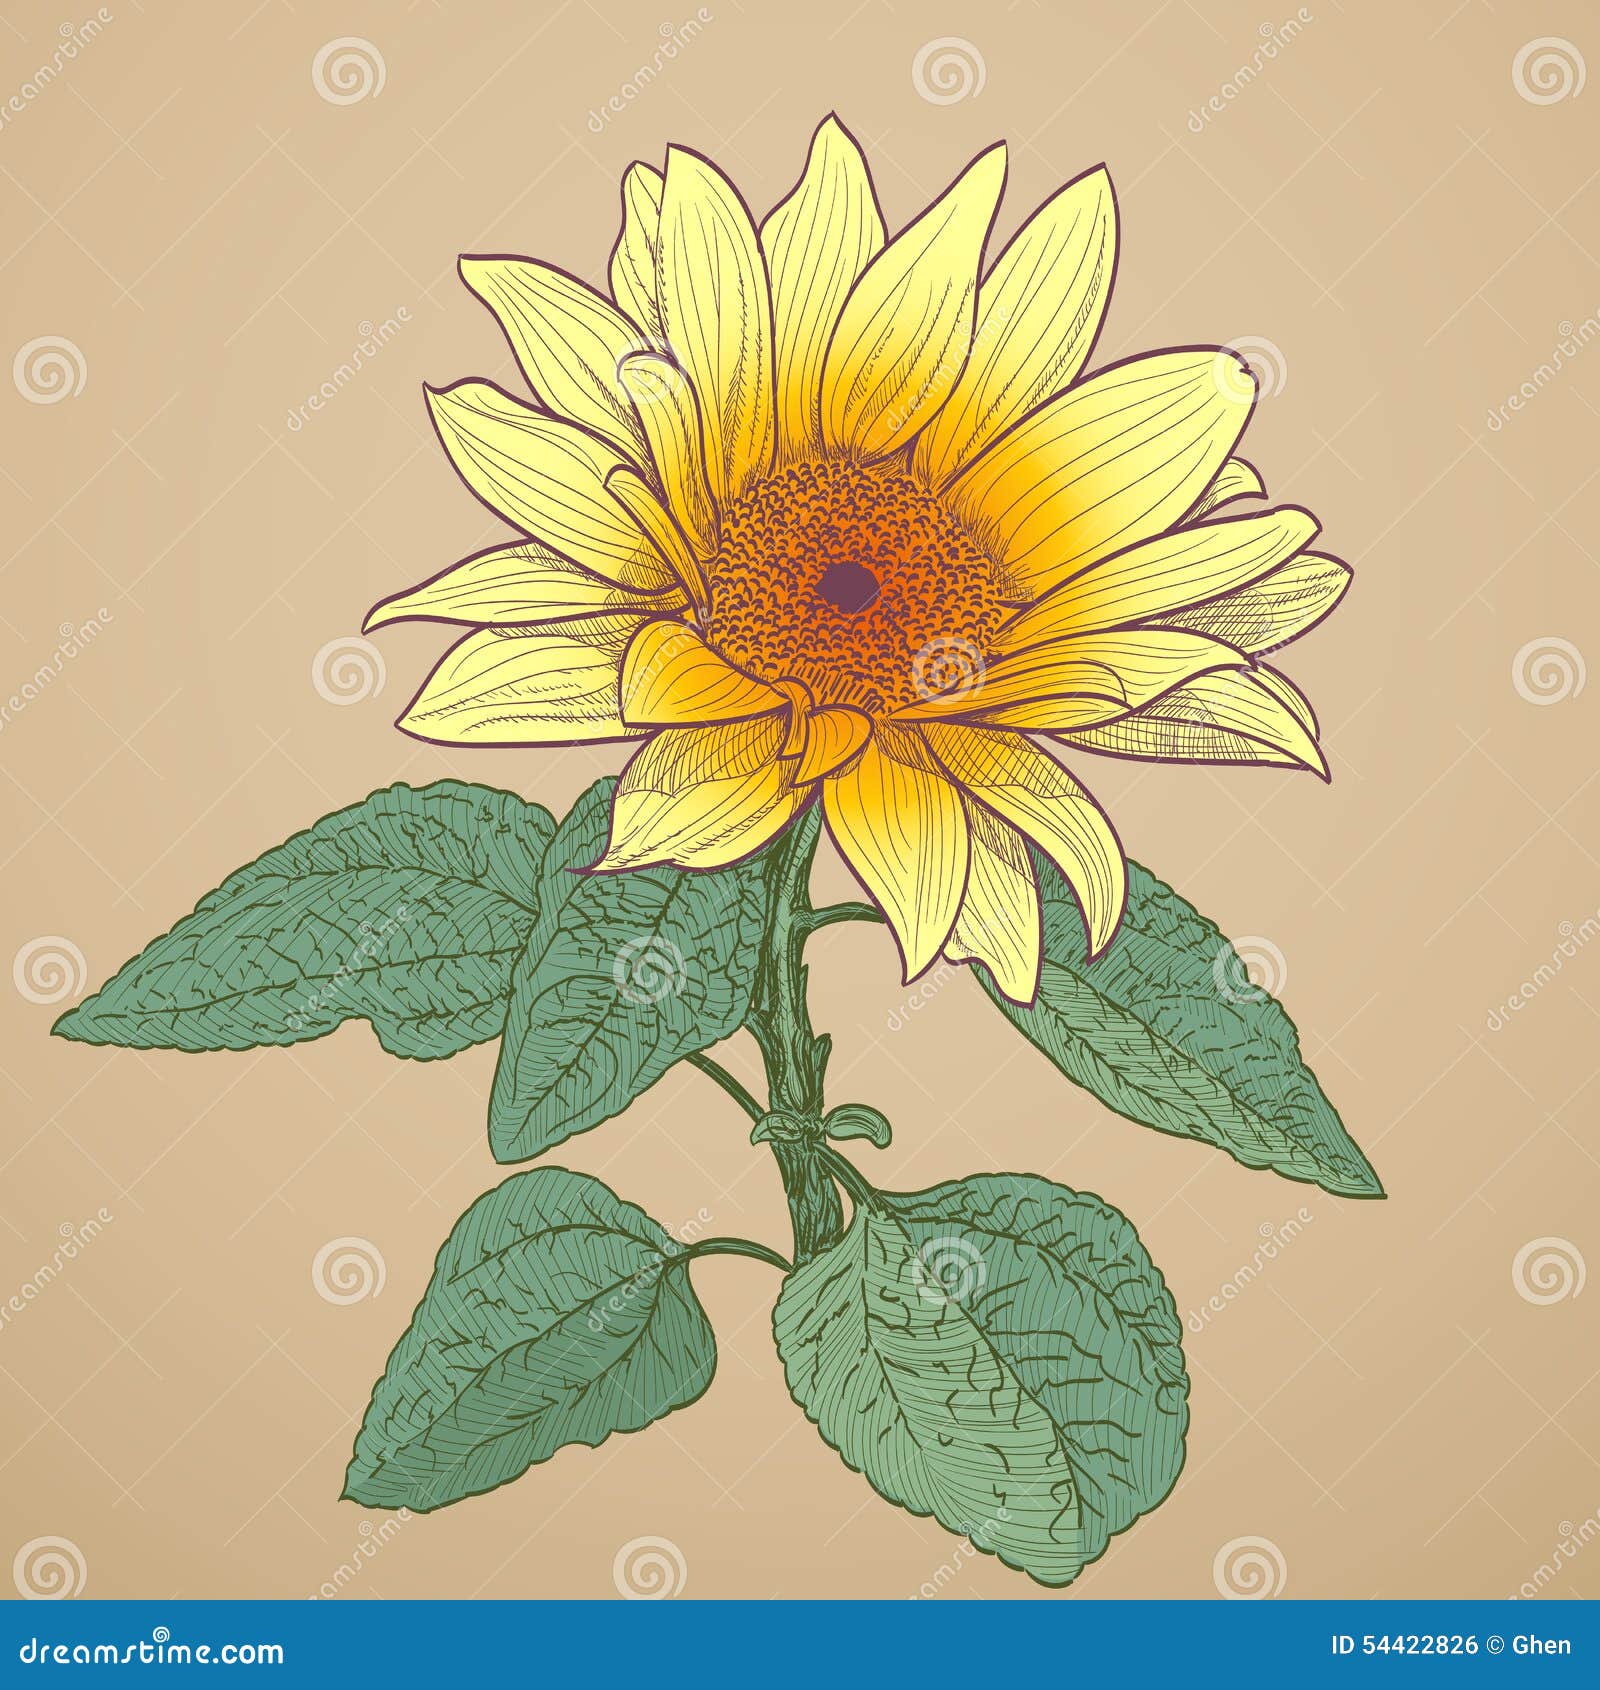 How to Draw Sunflower | Nil Tech - shop.nil-tech